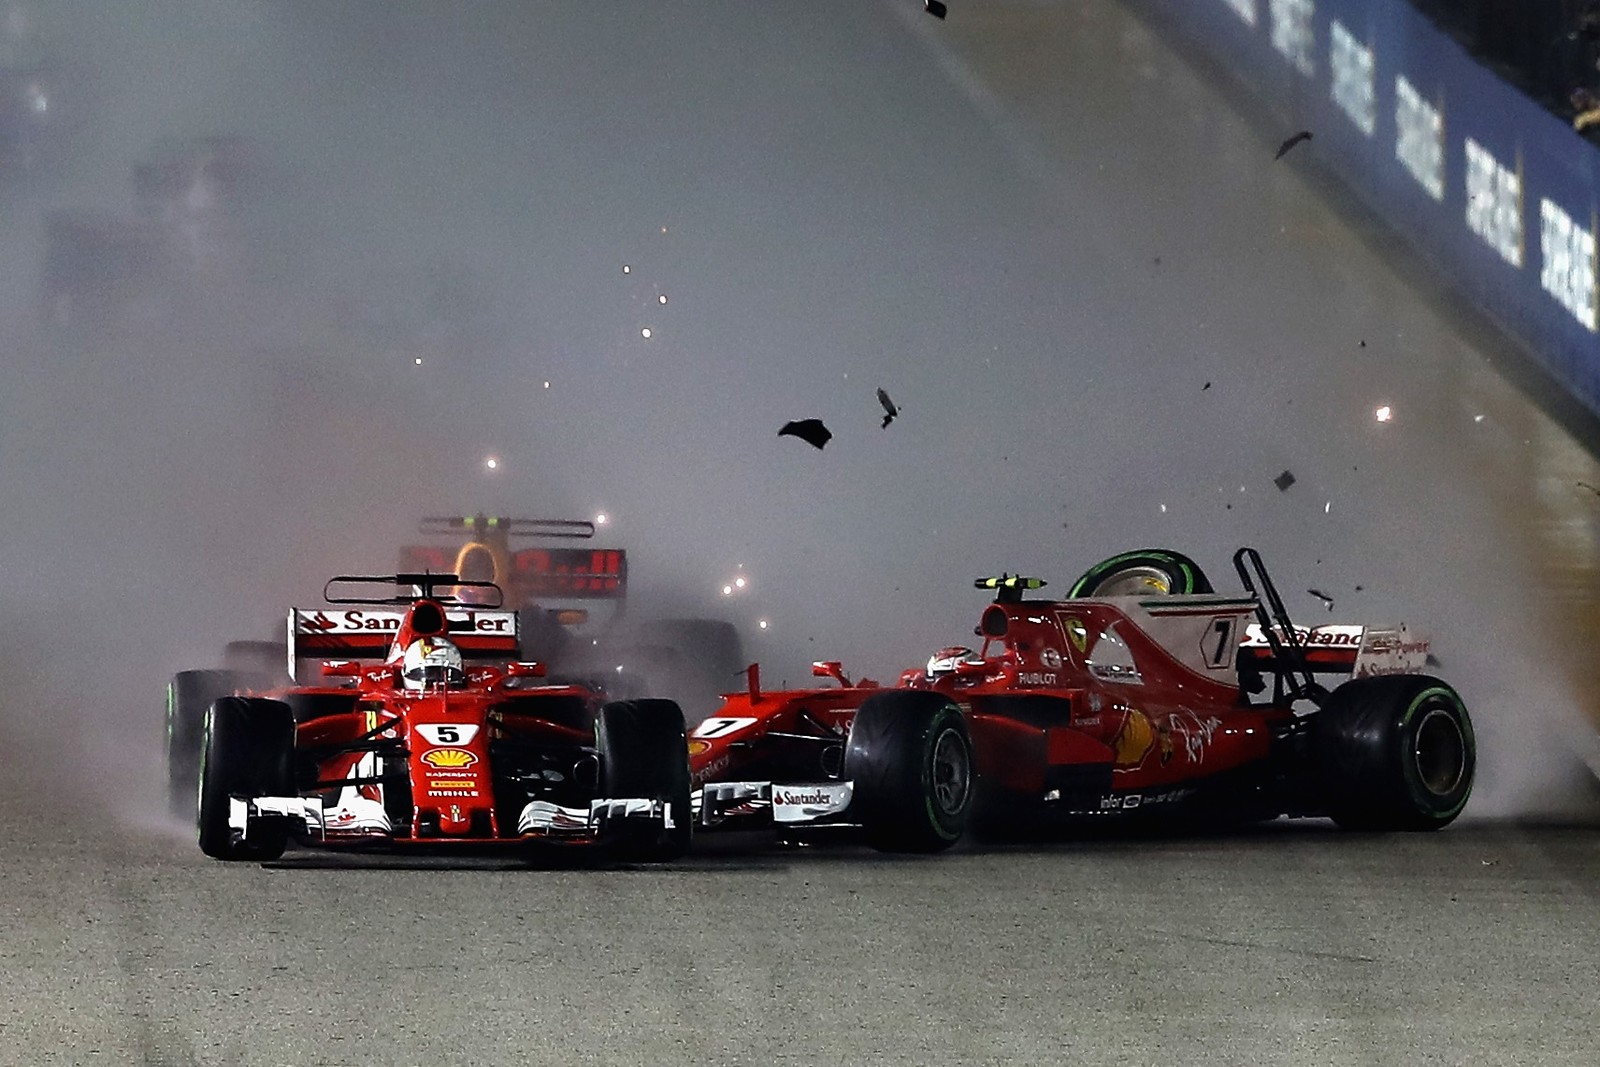 Após caos na largada, Vettel se isenta de culpa: 